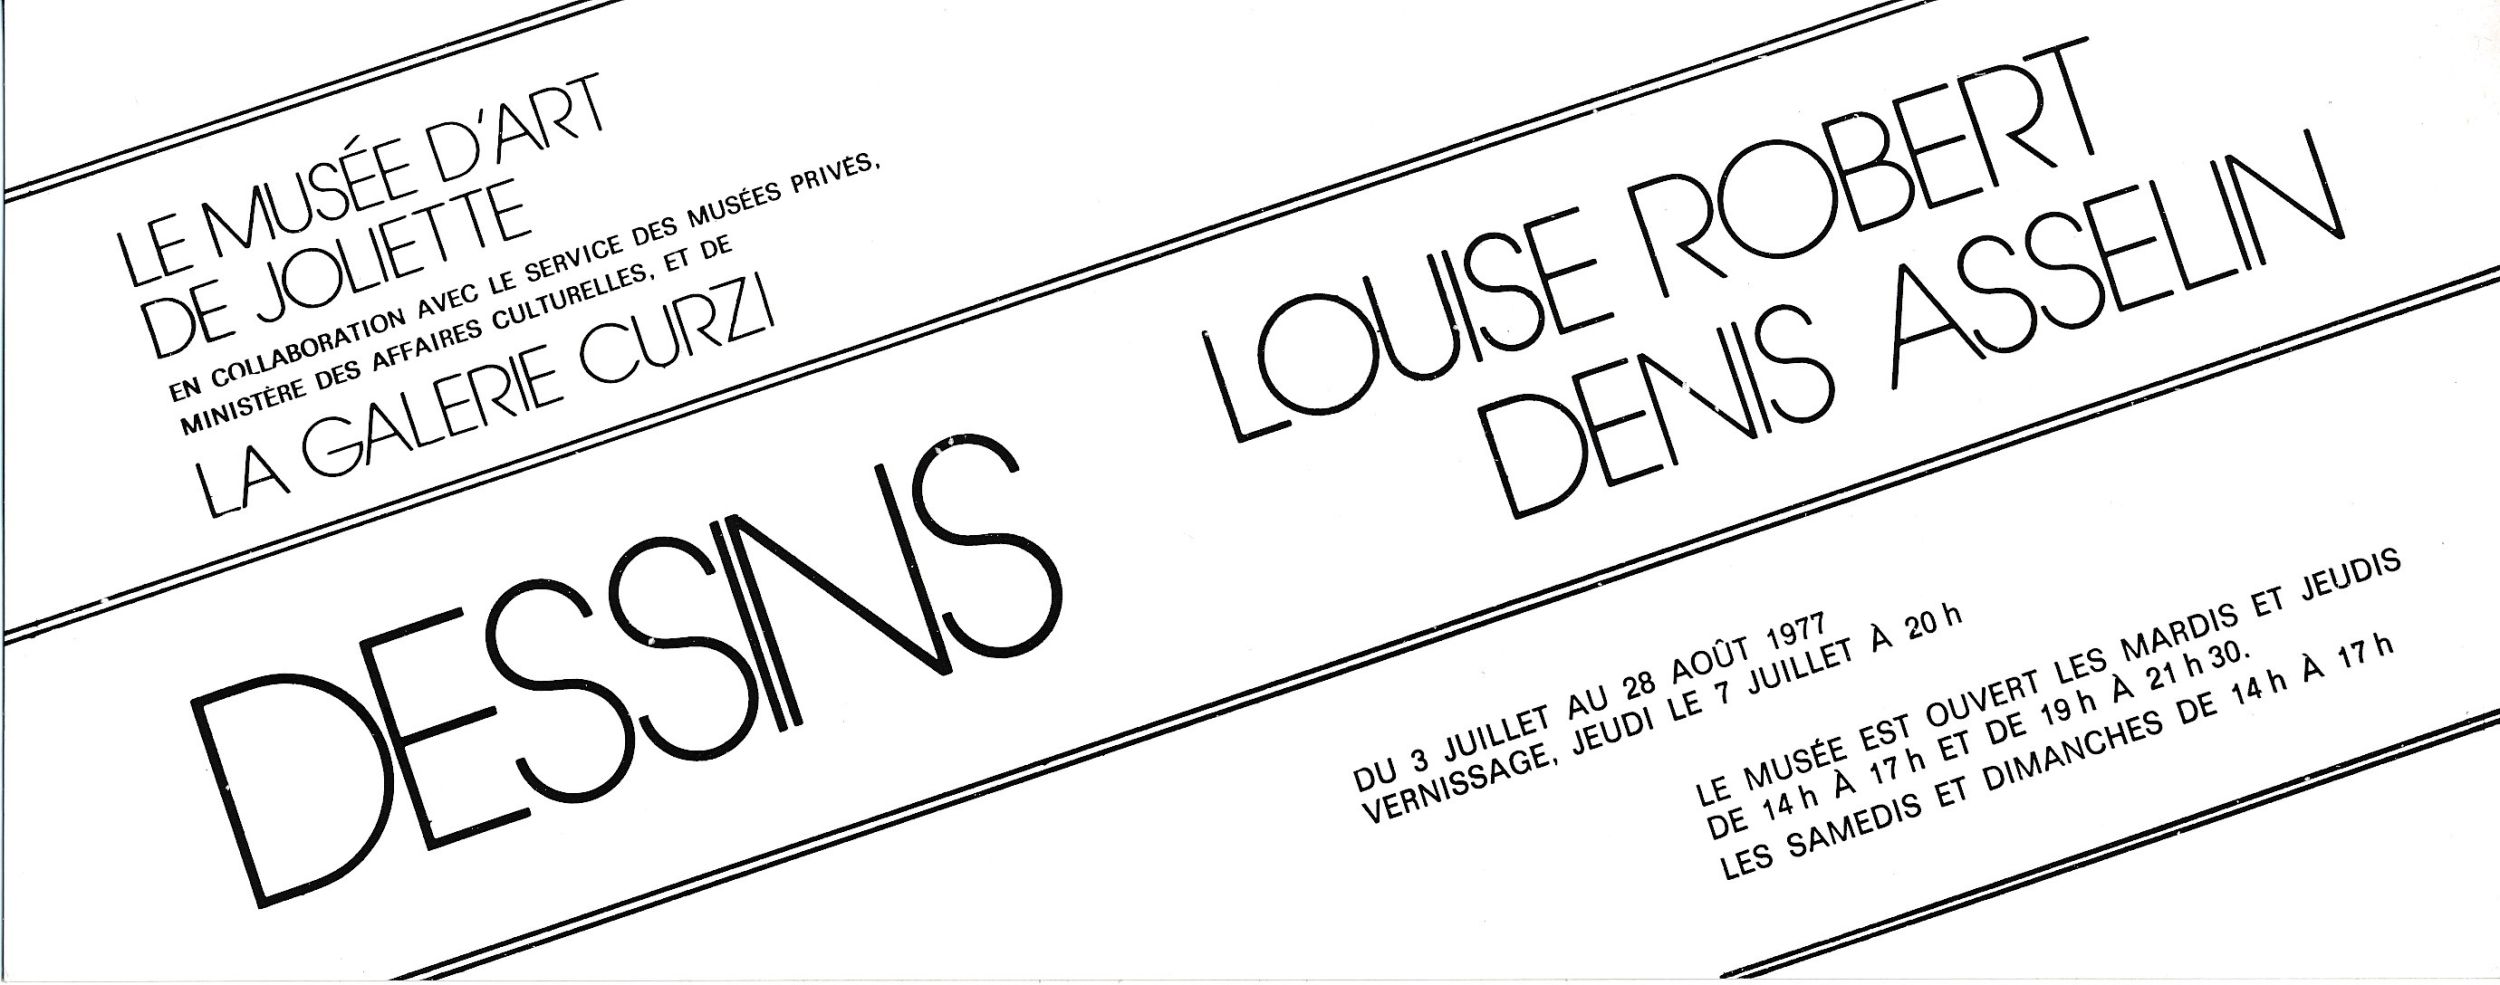 Carton d’invitation de l’exposition Dessins. Louise Robert Denis Asselin, Musée d'art de Joliette, 1977.